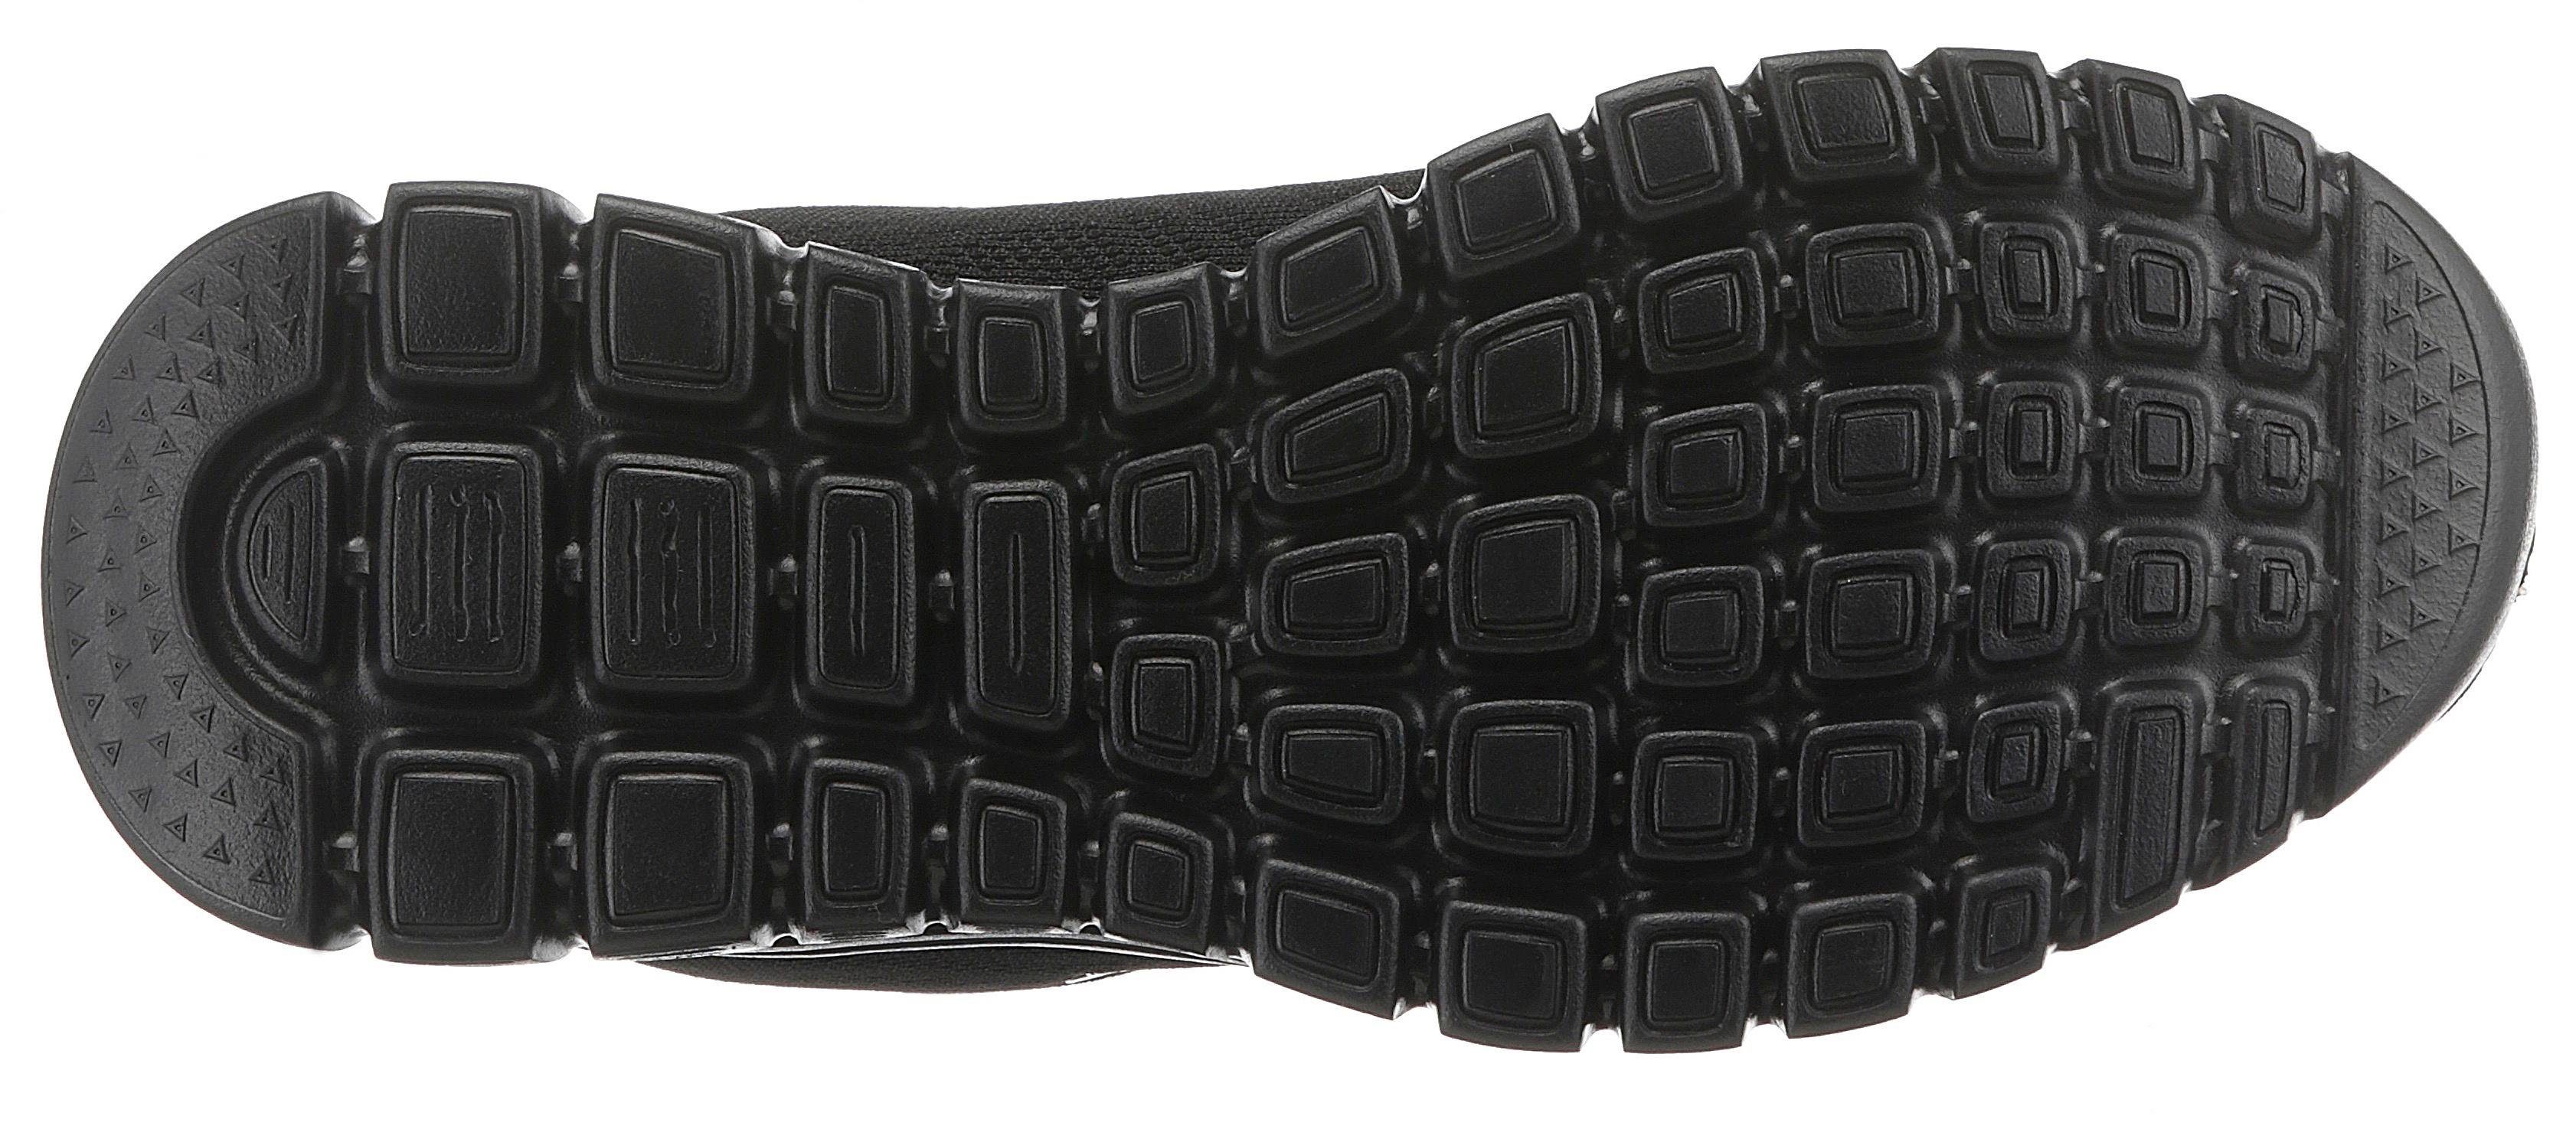 Skechers Graceful - Get Dämpfung mit durch schwarz Sneaker Connected Memory Foam